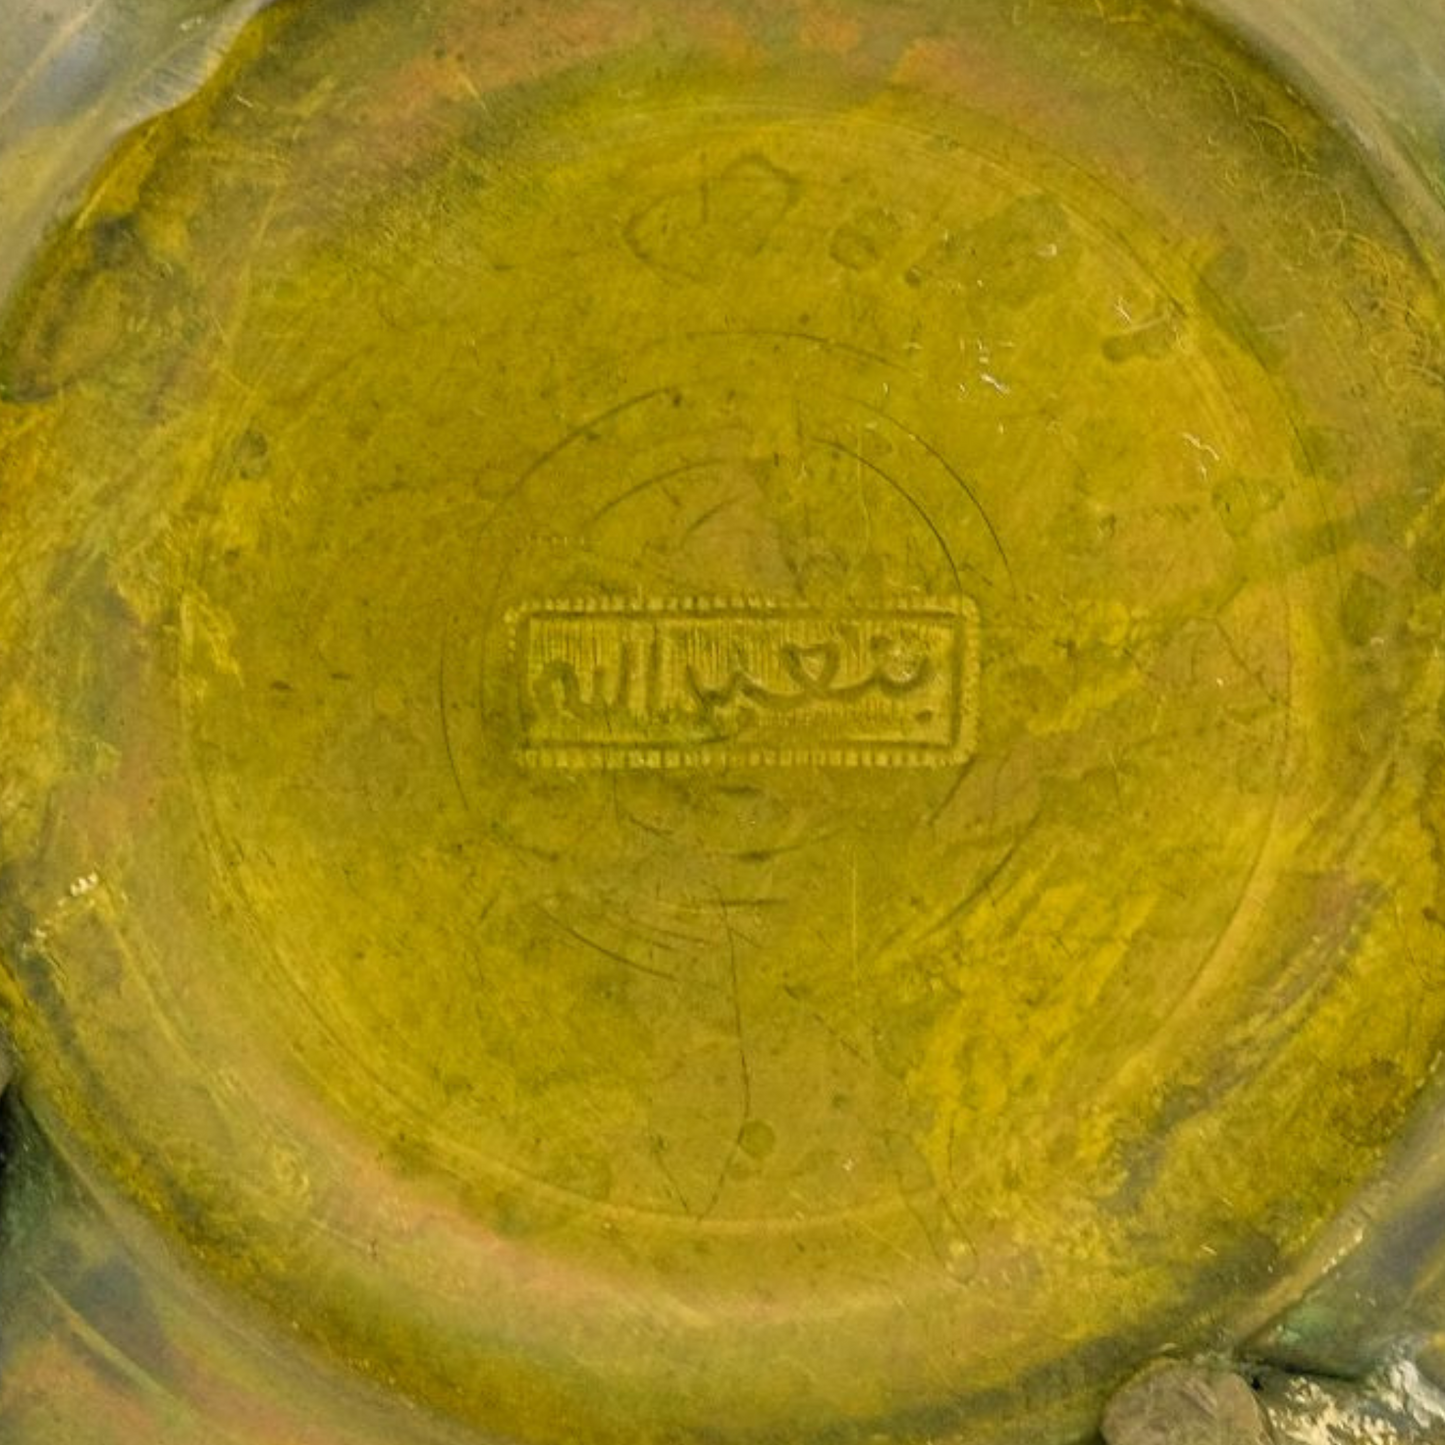 Vintage Moroccan Copper Tea Pot